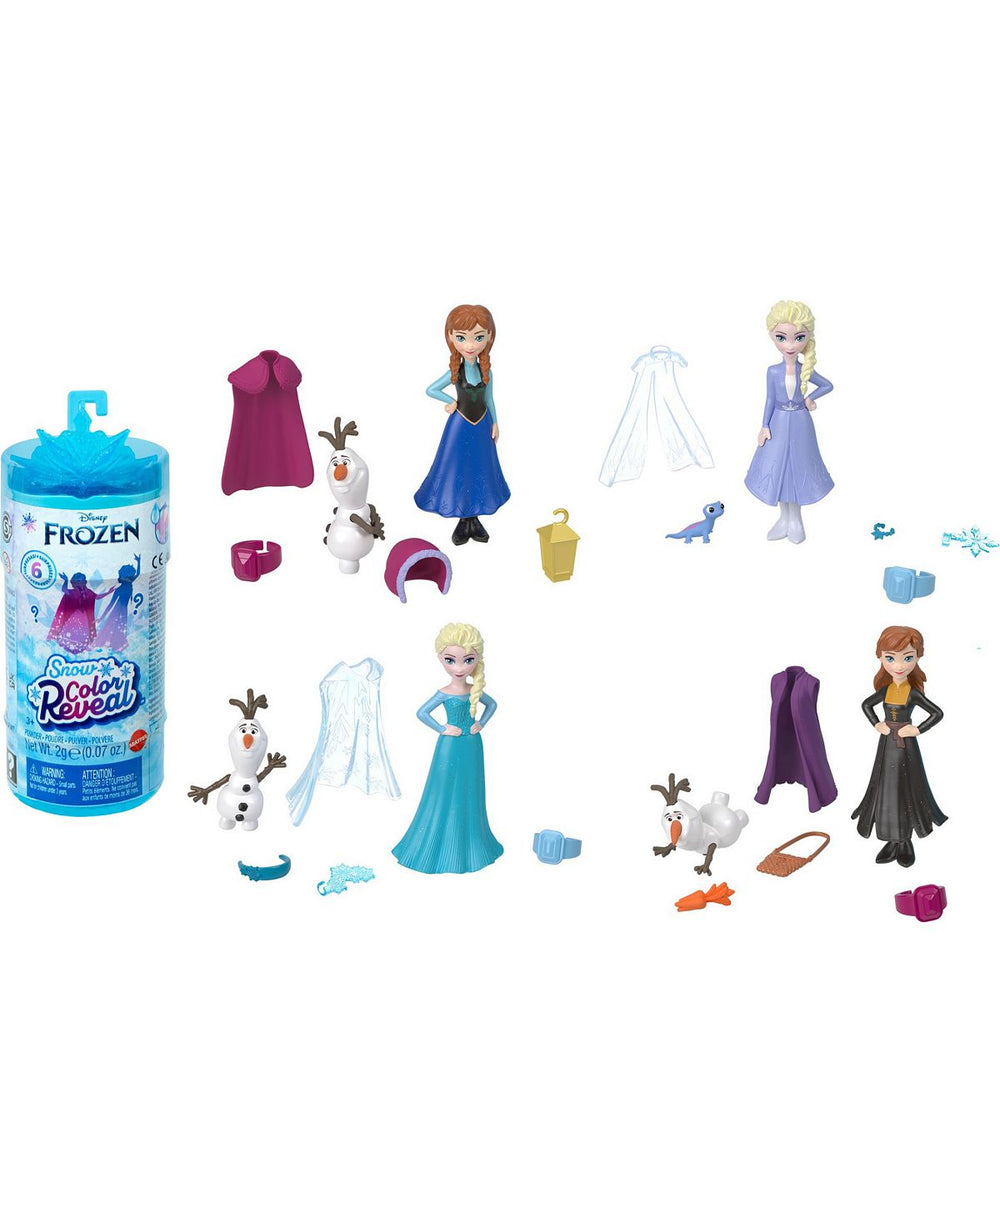 Disney Princess Frozen Snow Color Reveal Doll with Magical Surprises